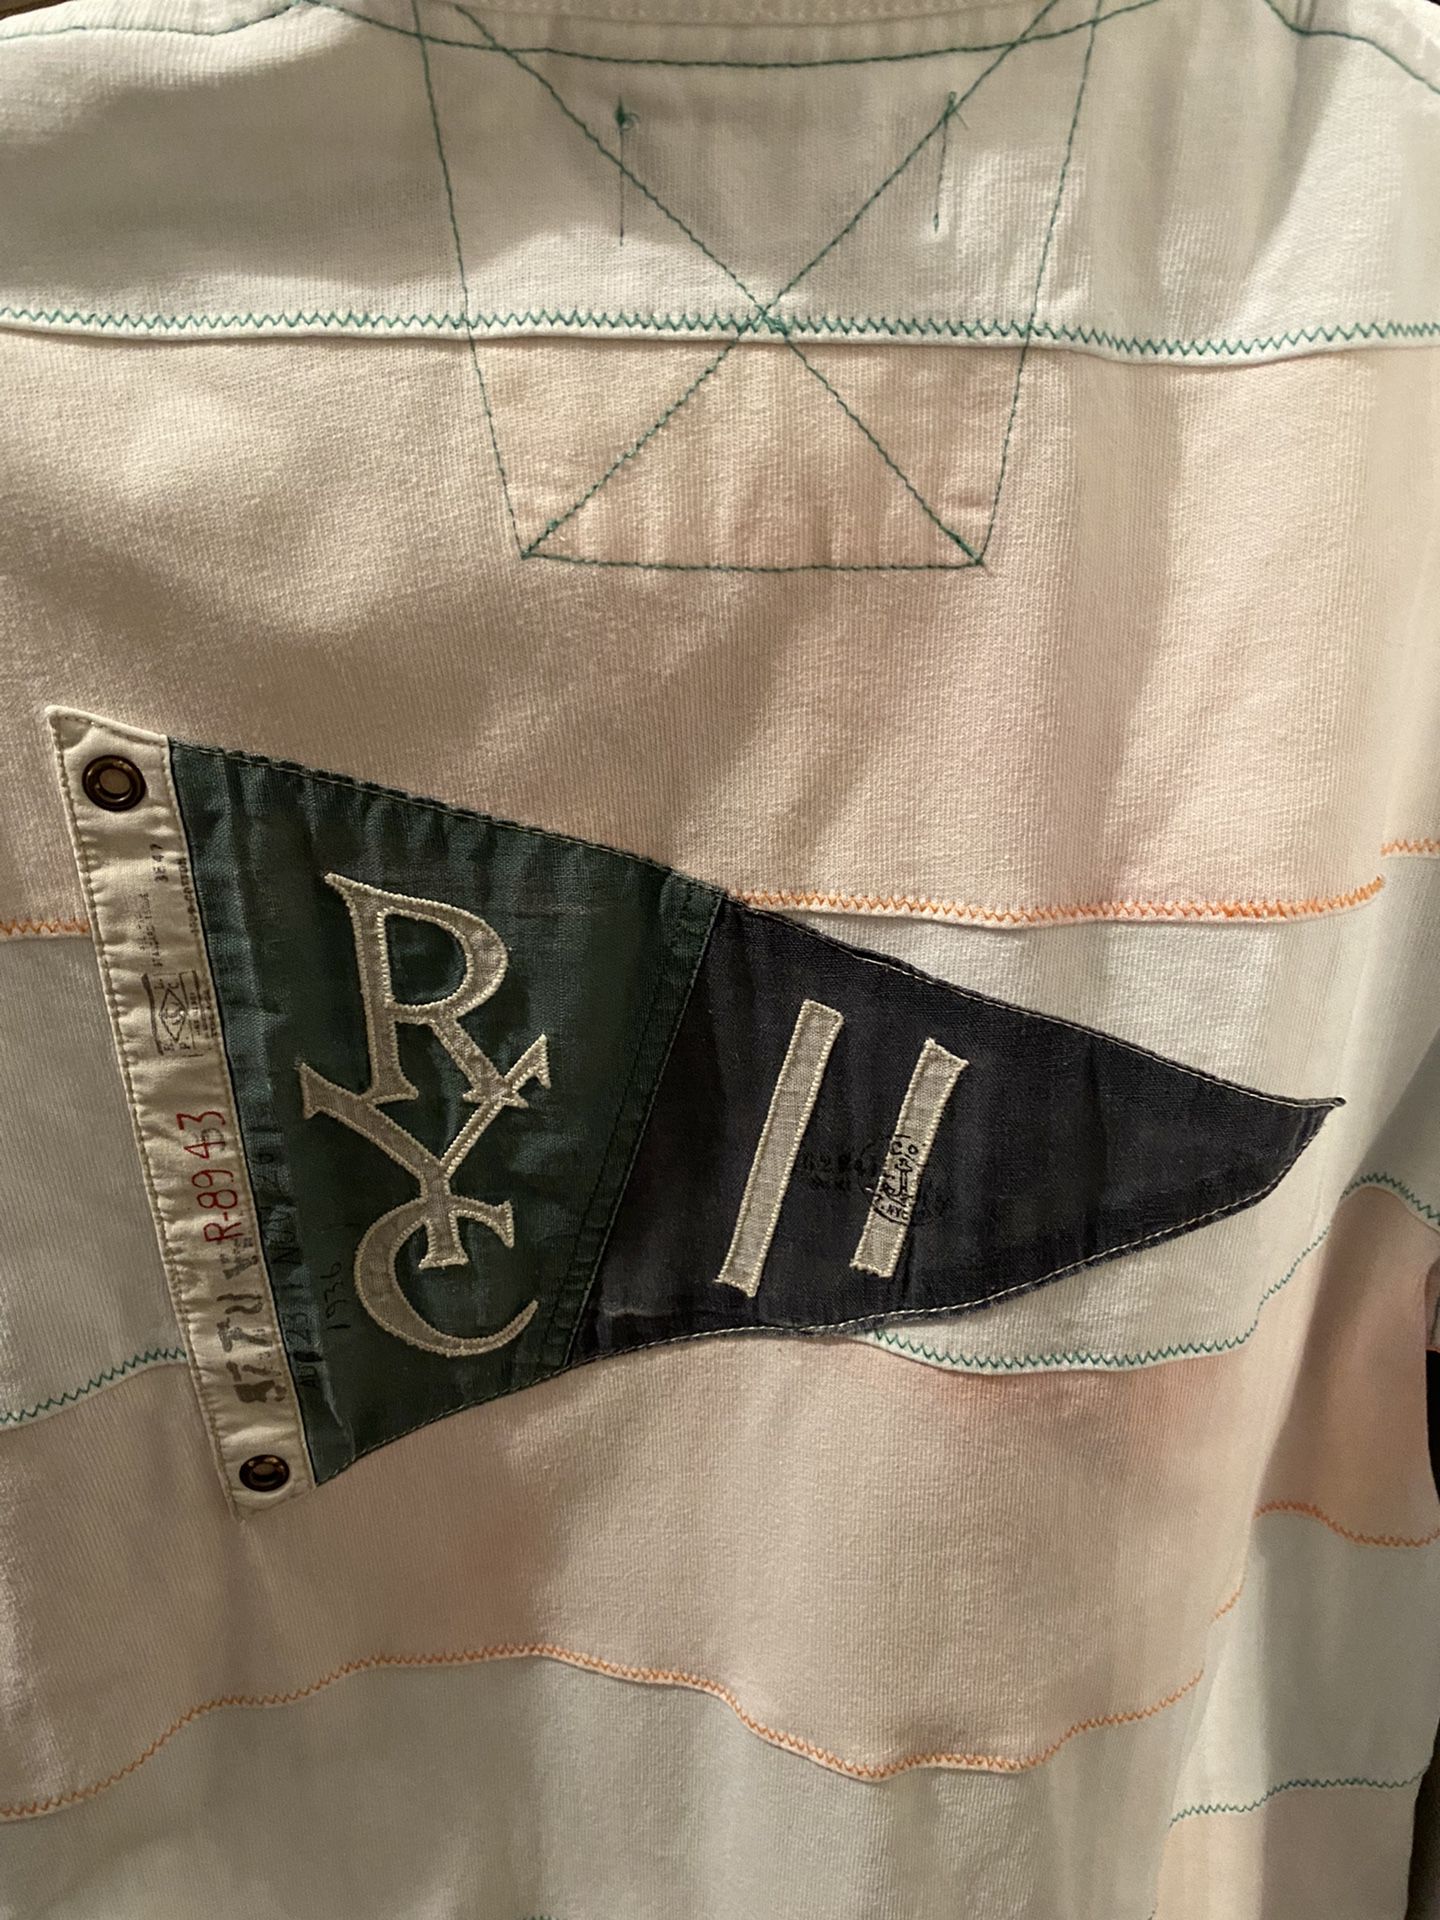 Ralph Lauren Polo Men’s Yacht Club Polo Shirt - Sz M Custom Fit